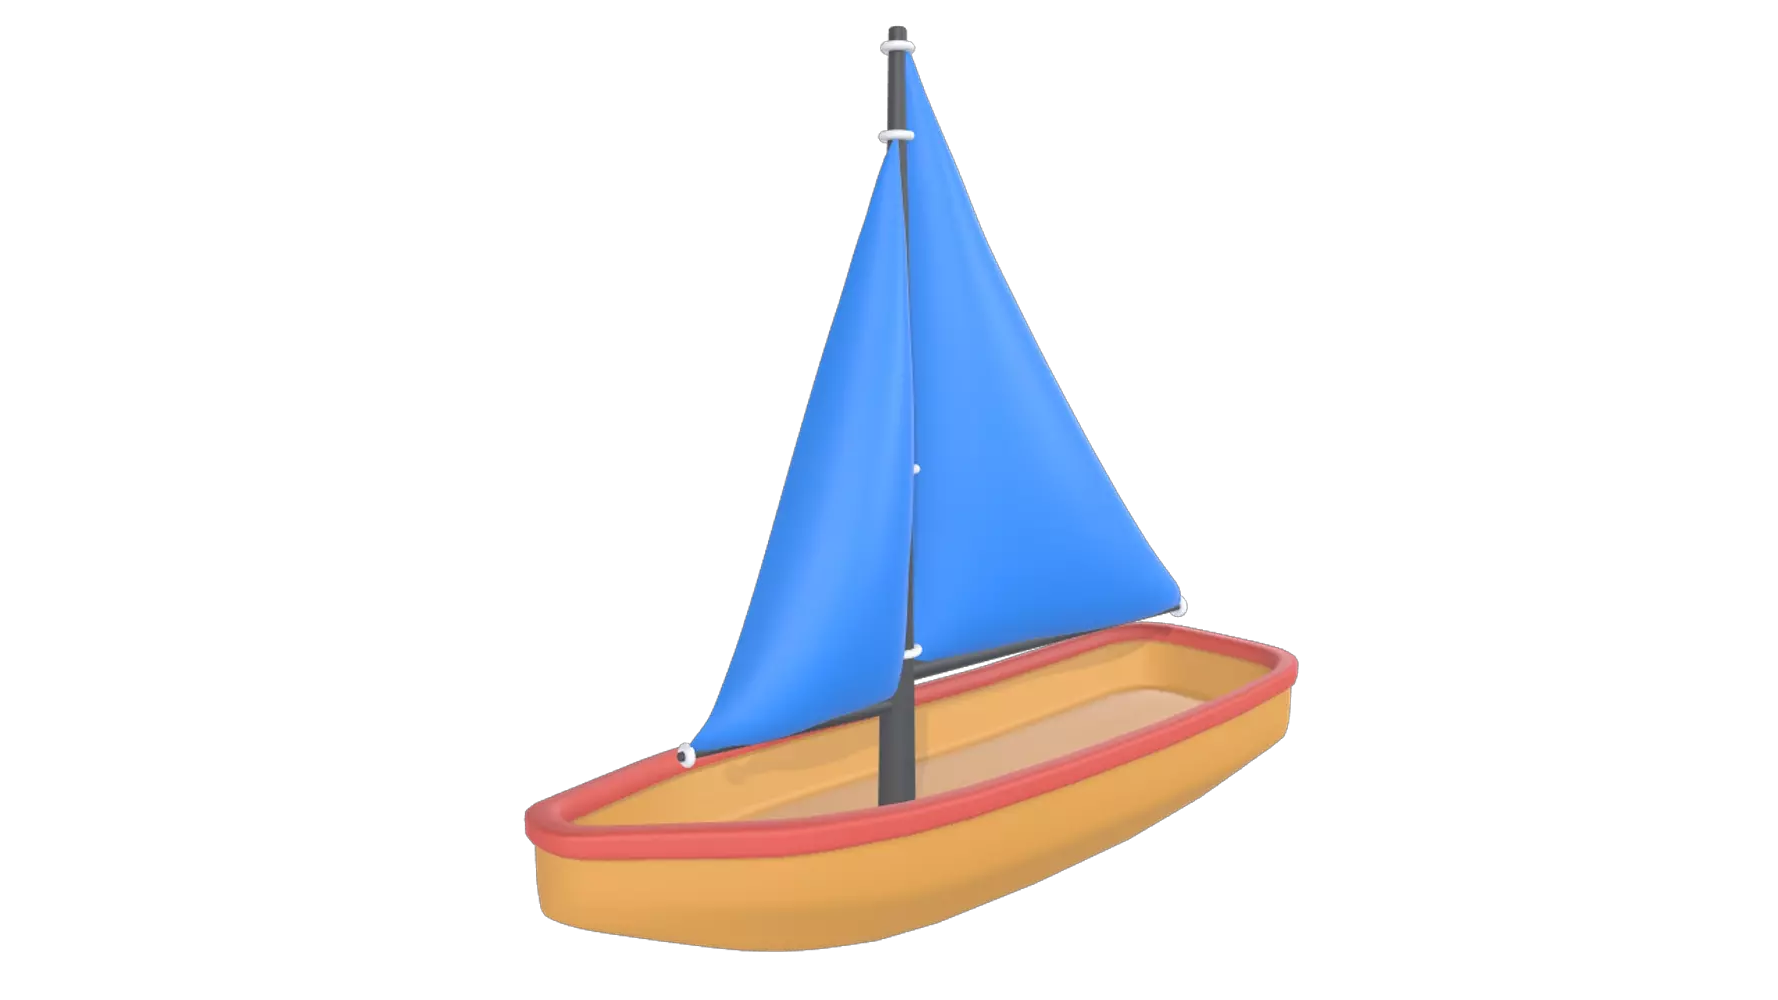 Sailing 3D Graphic